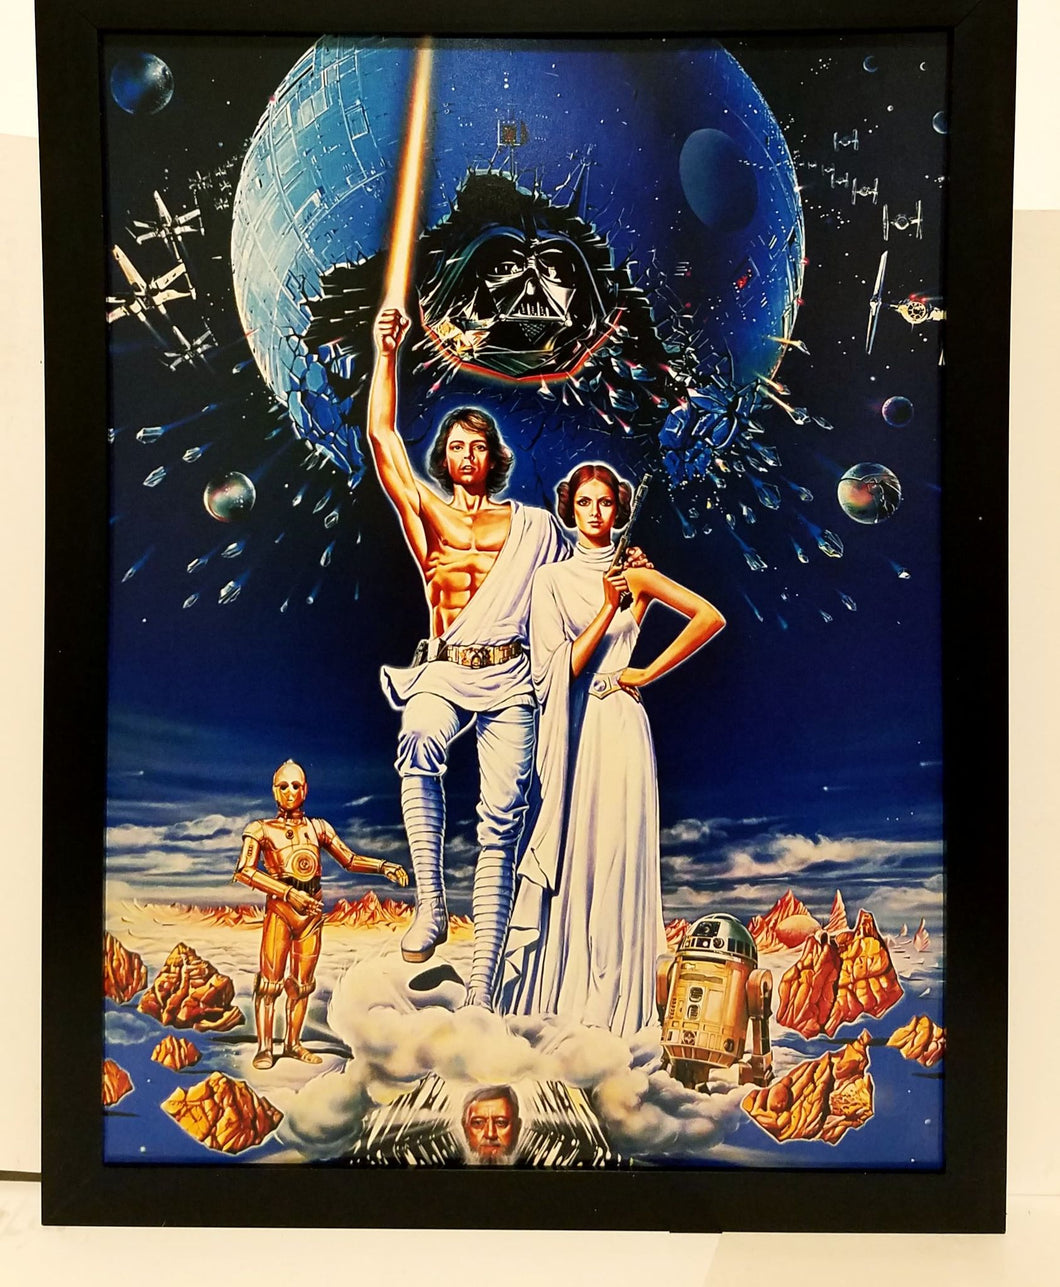 Star Wars 1977 Poland Variant by Wojtek Siudmak 9x12 FRAMED Art Print Movie Poster